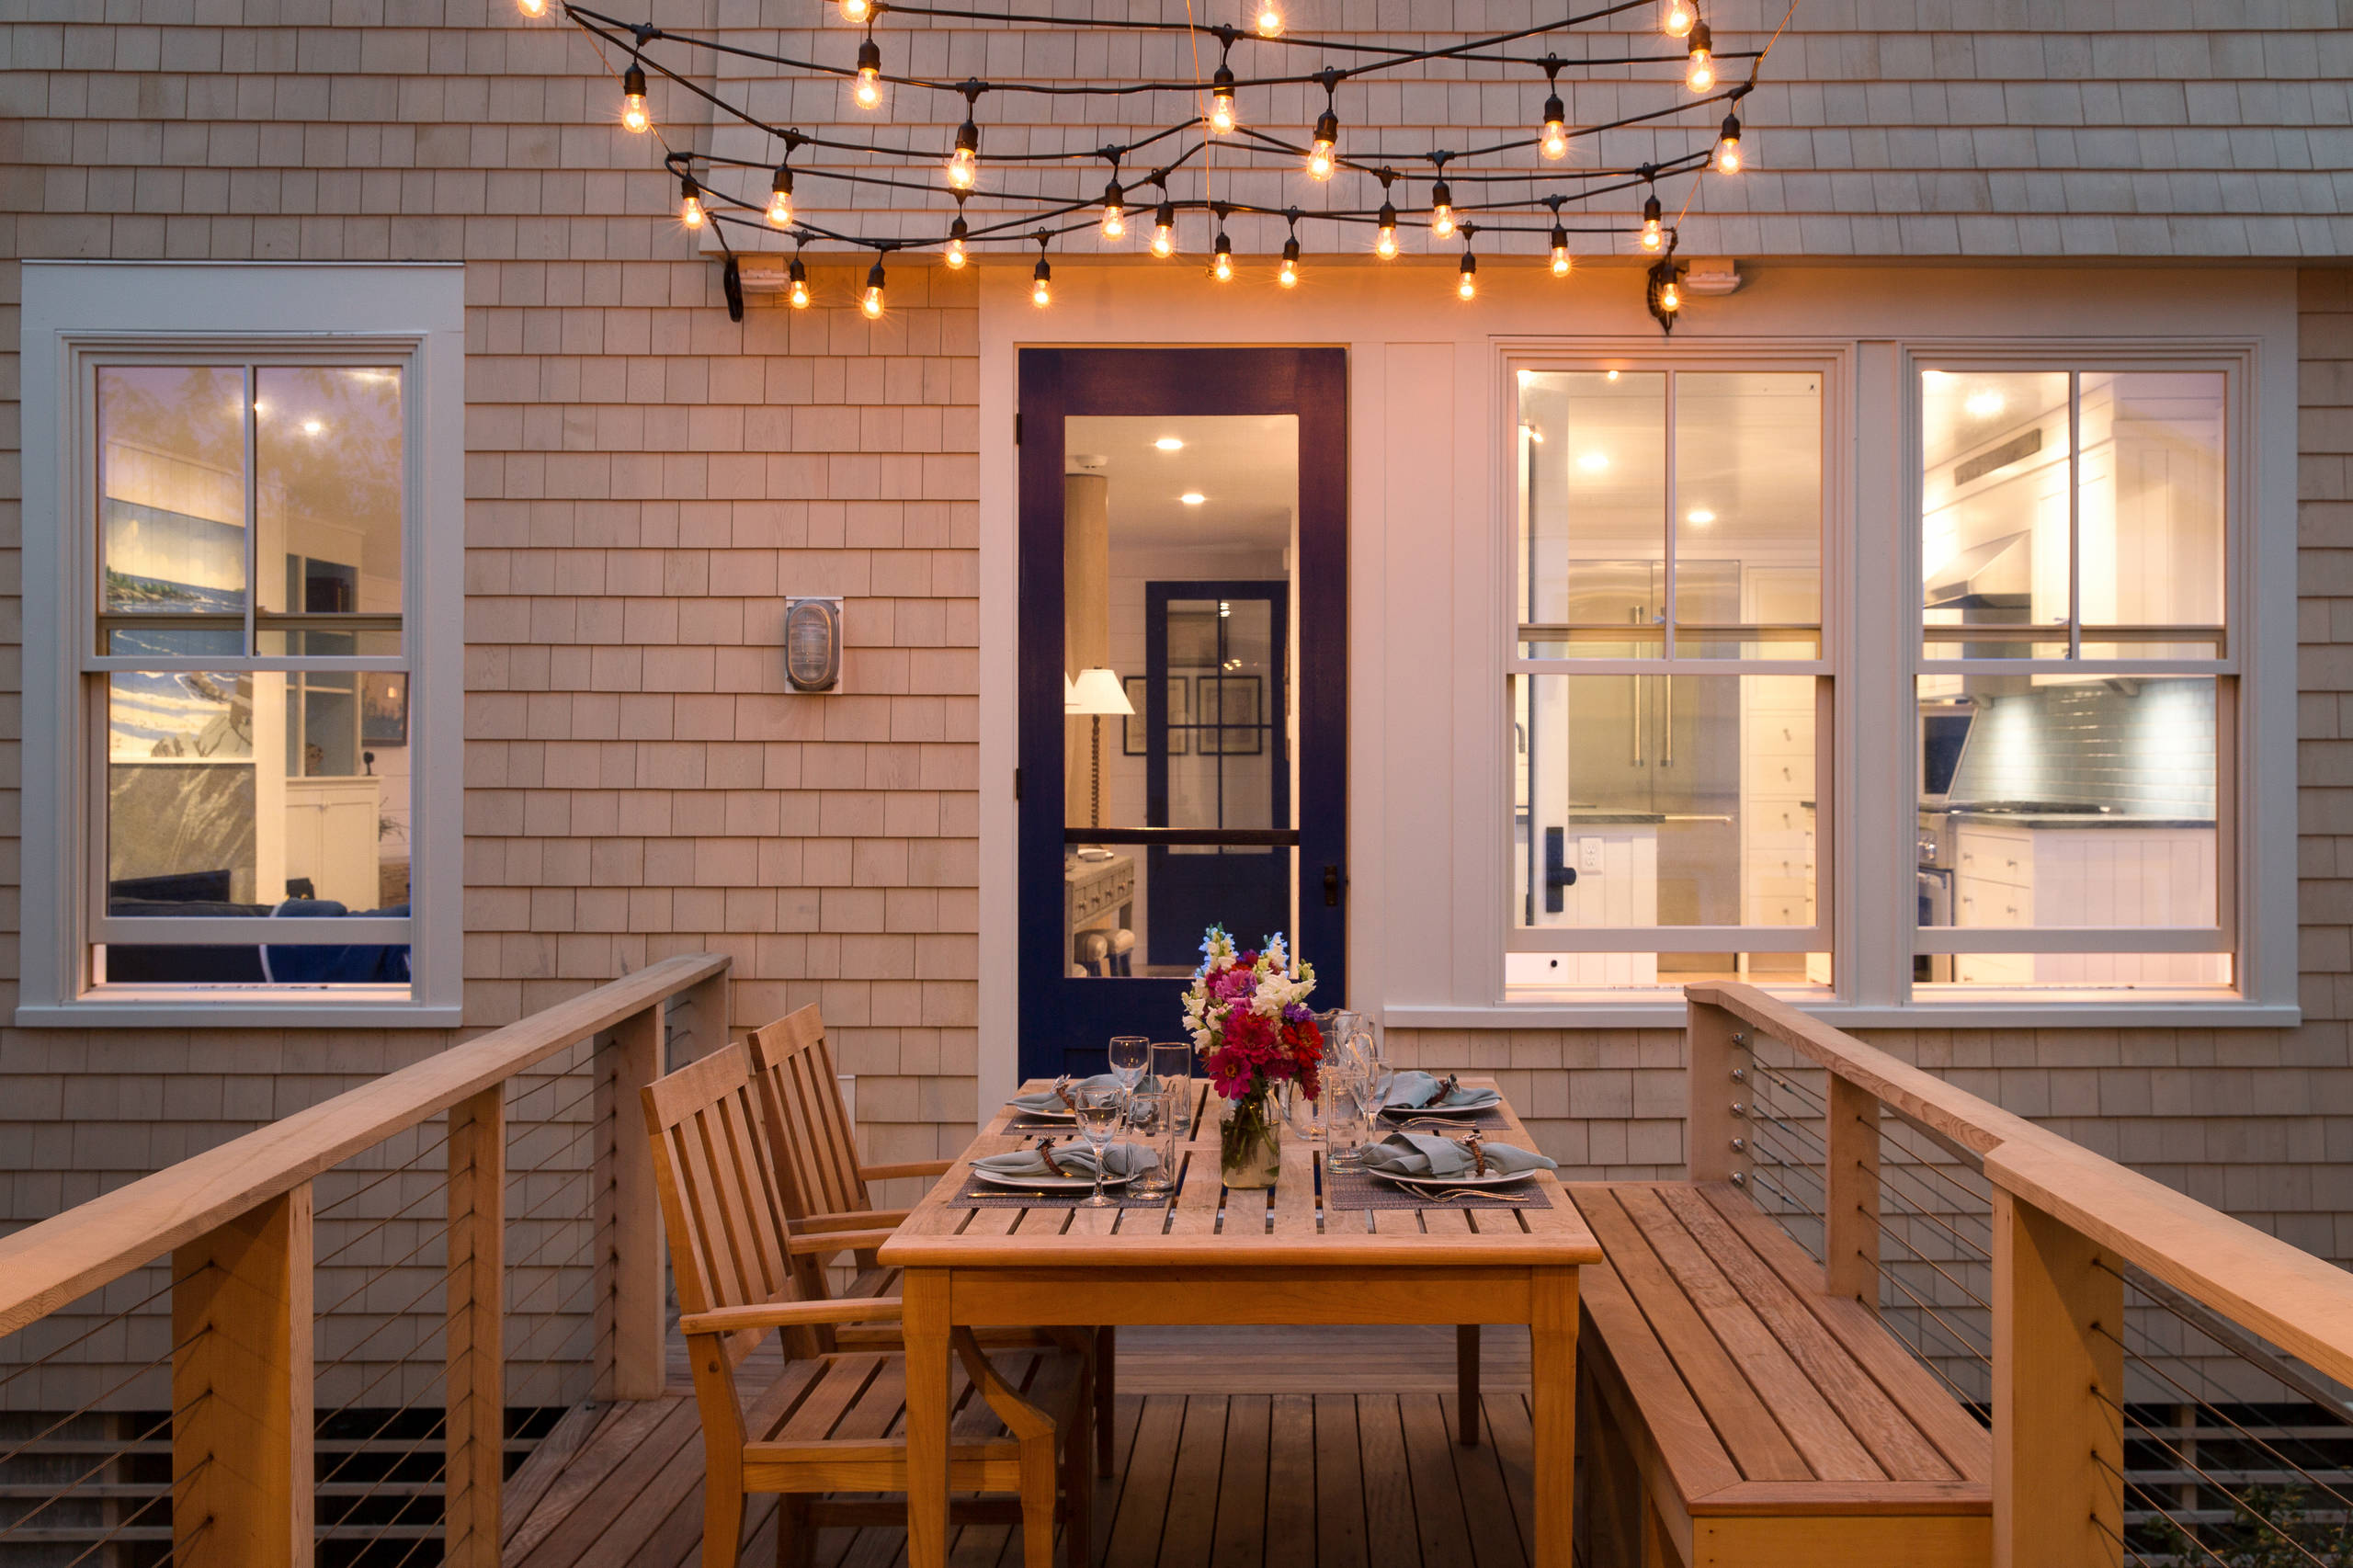 75 Beautiful Small Backyard Deck Pictures Ideas December 2020 Houzz